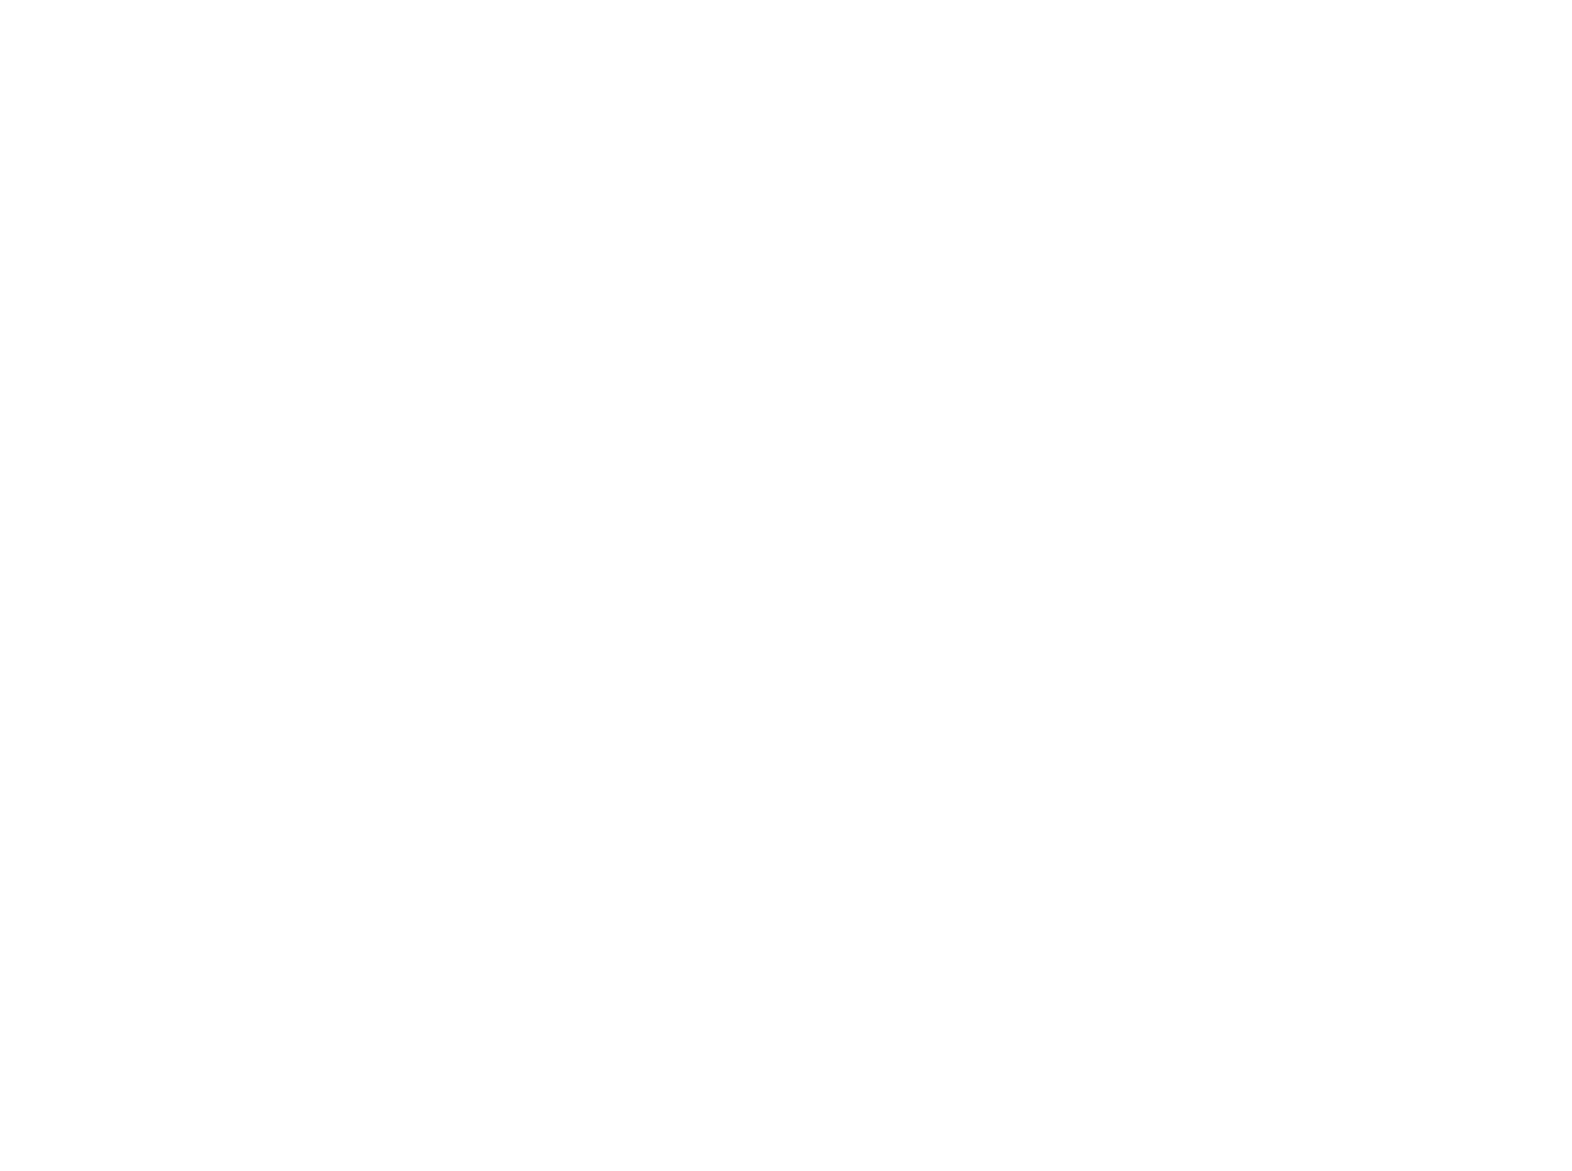 Xylem logo for dark backgrounds (transparent PNG)